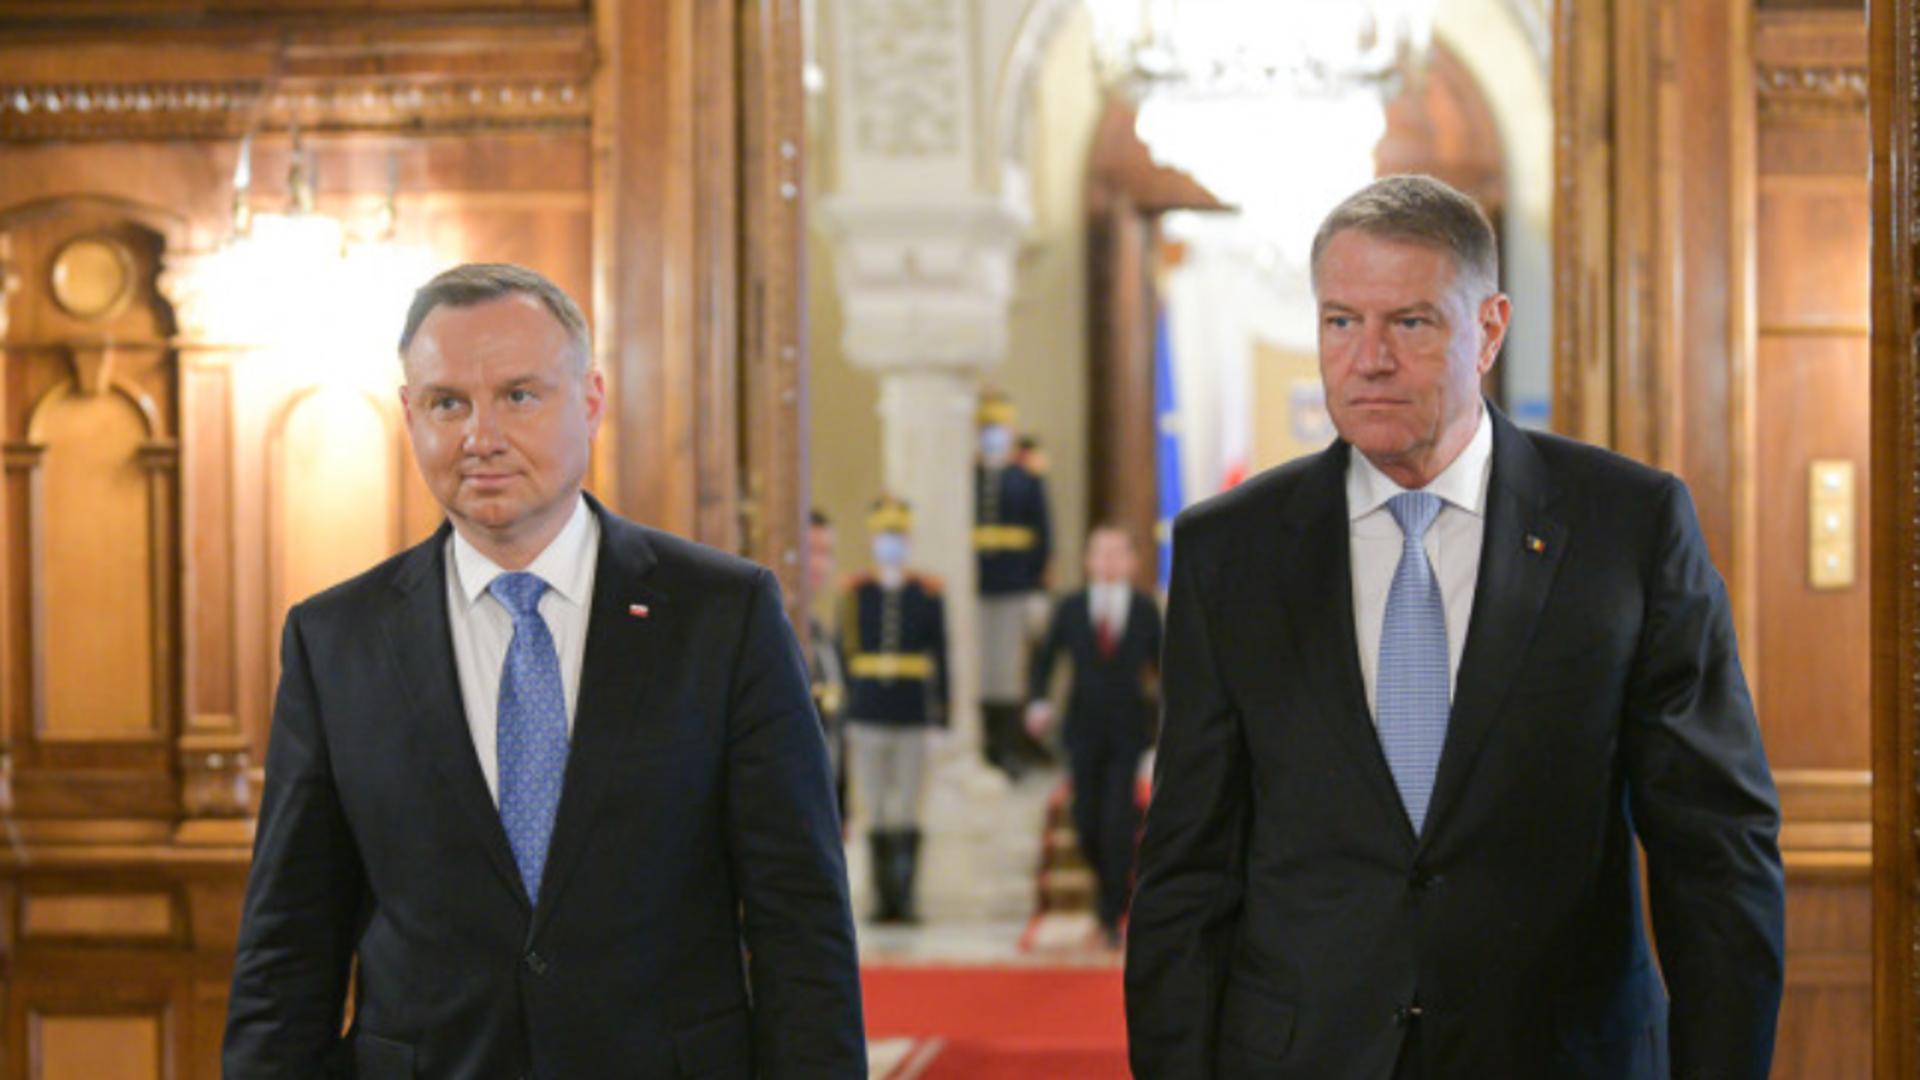 Andzrej Duda, președintele Poloniei, și Klaus Iohannis